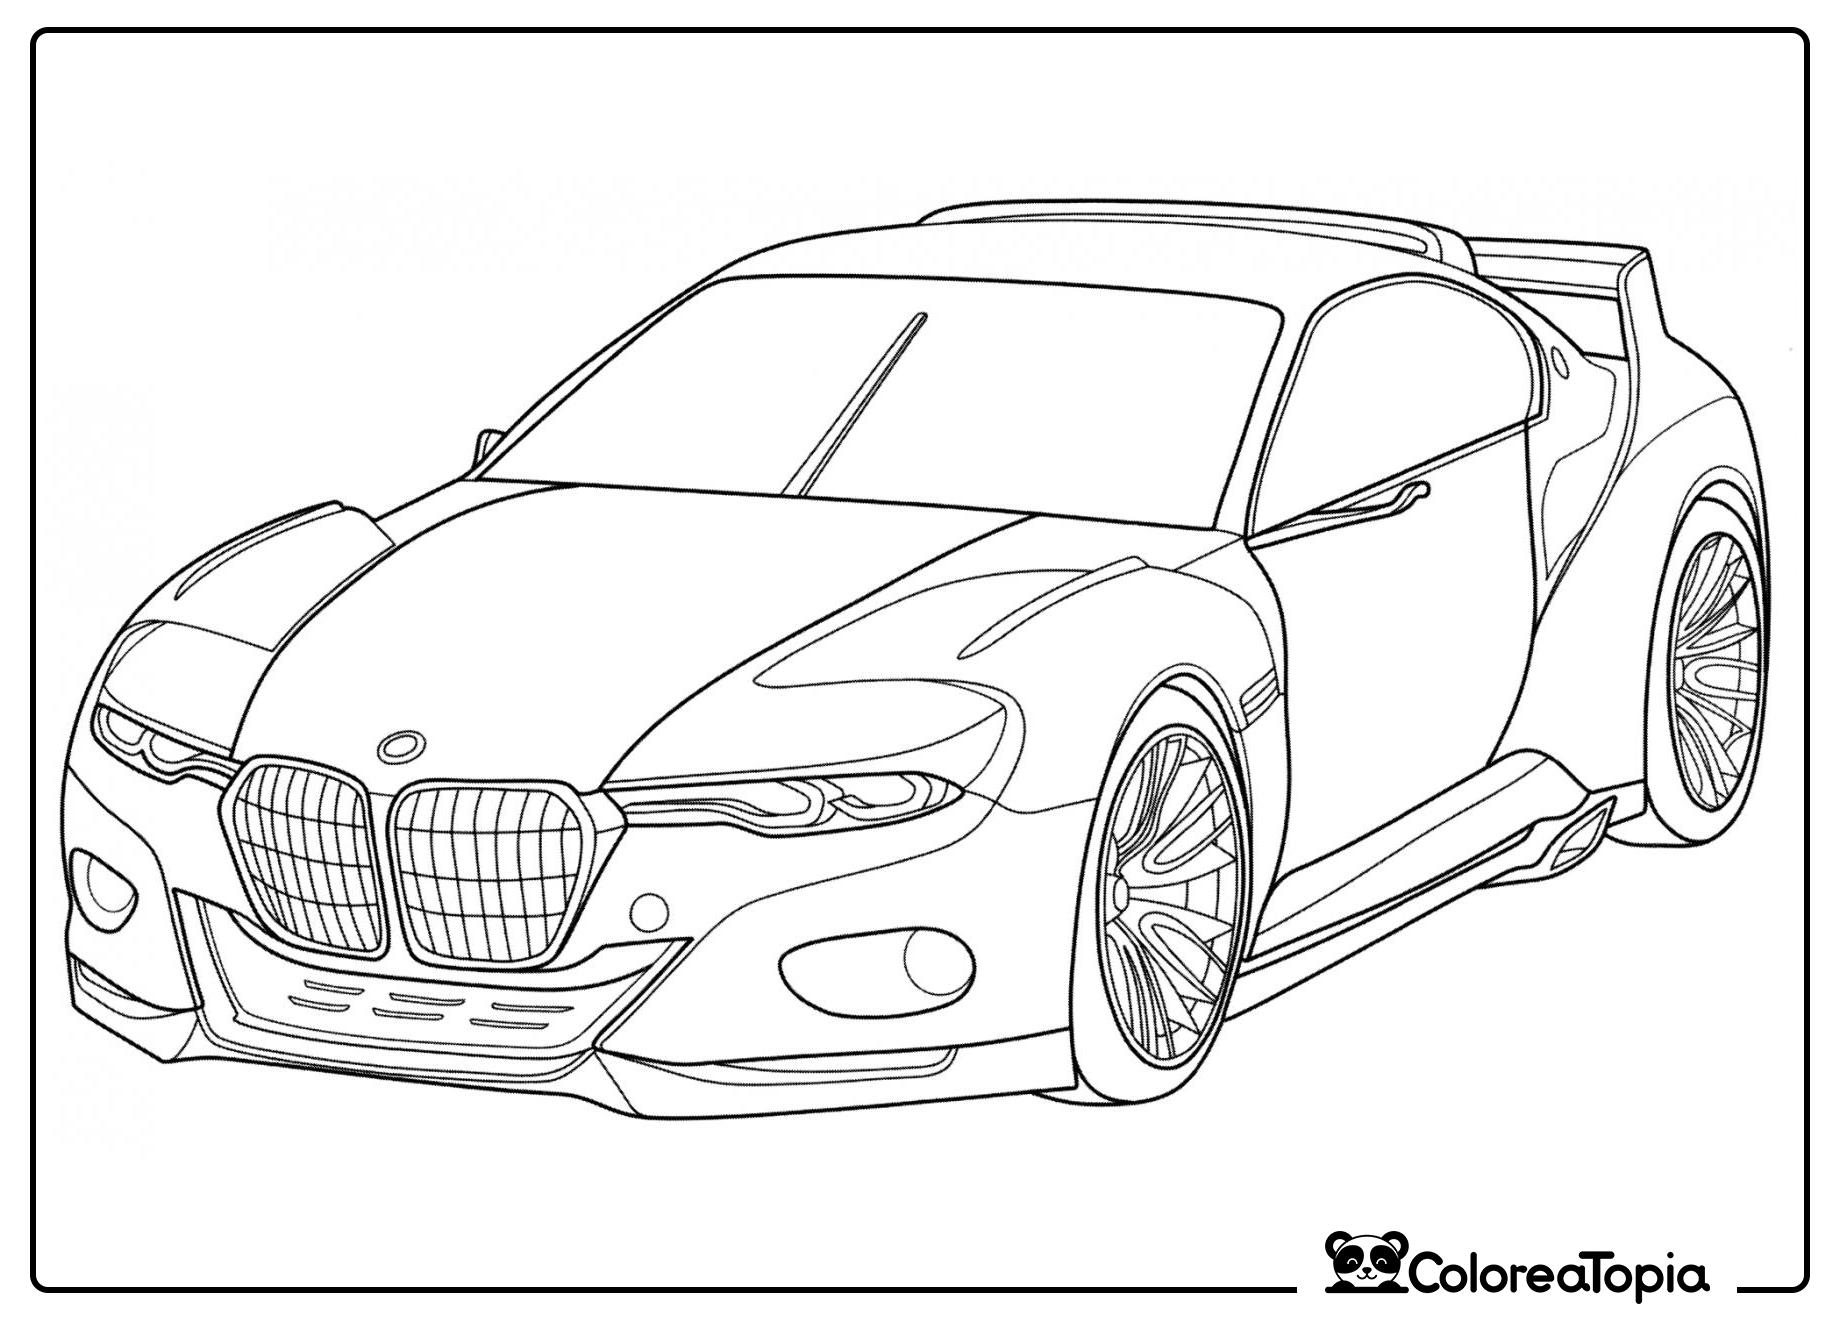 BMW 30 CSL Homenaje - dibujo para colorear